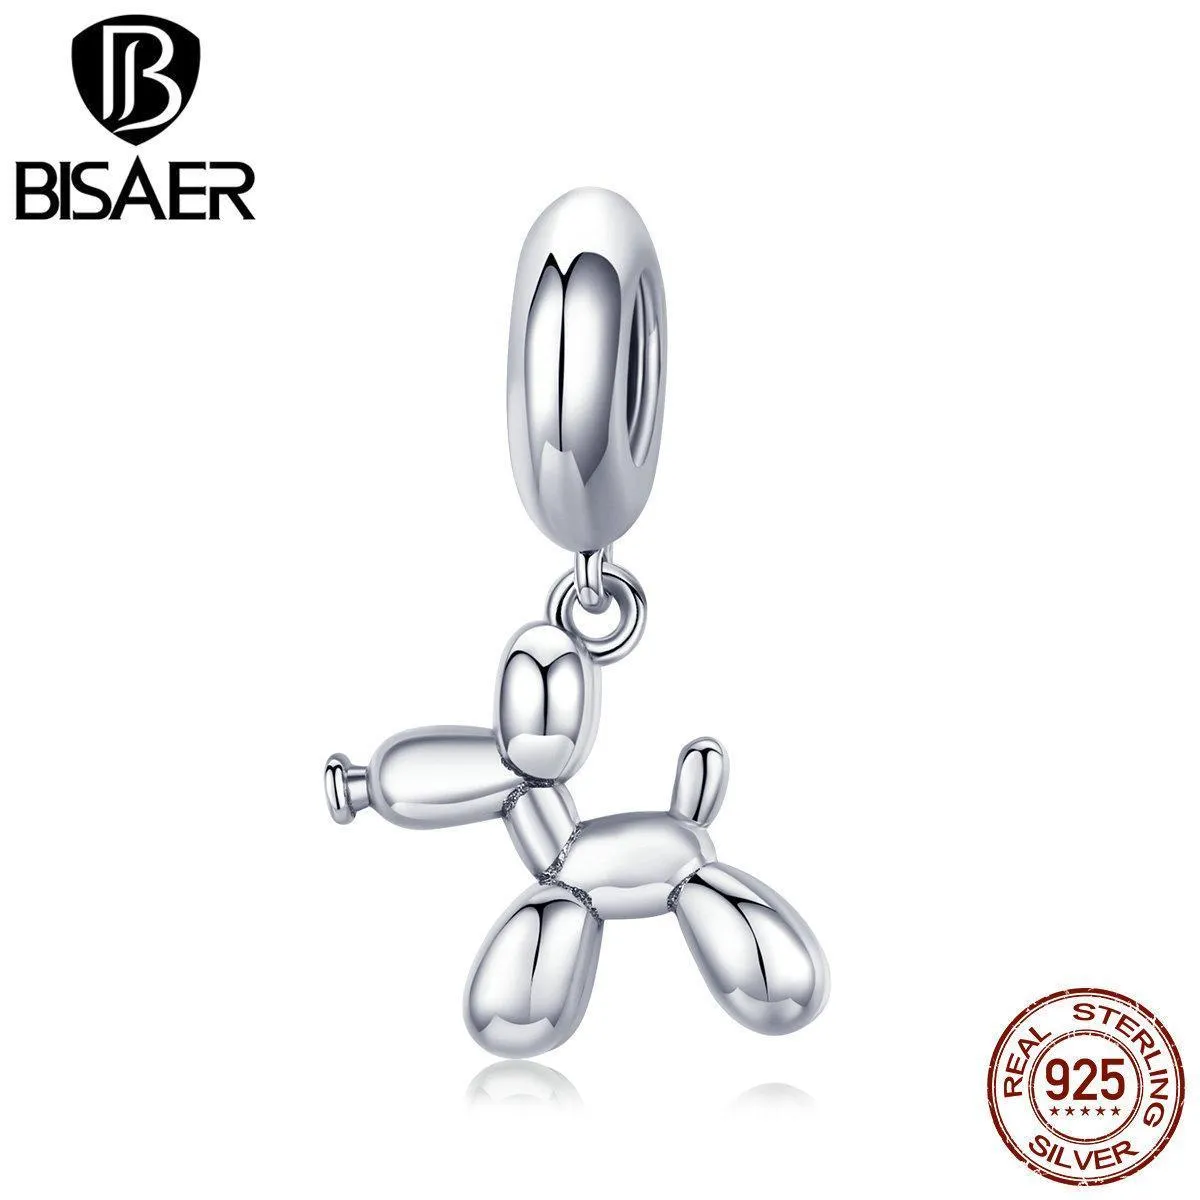 bisaer-925-sterling-silver-balloon-dog-tools.jpg